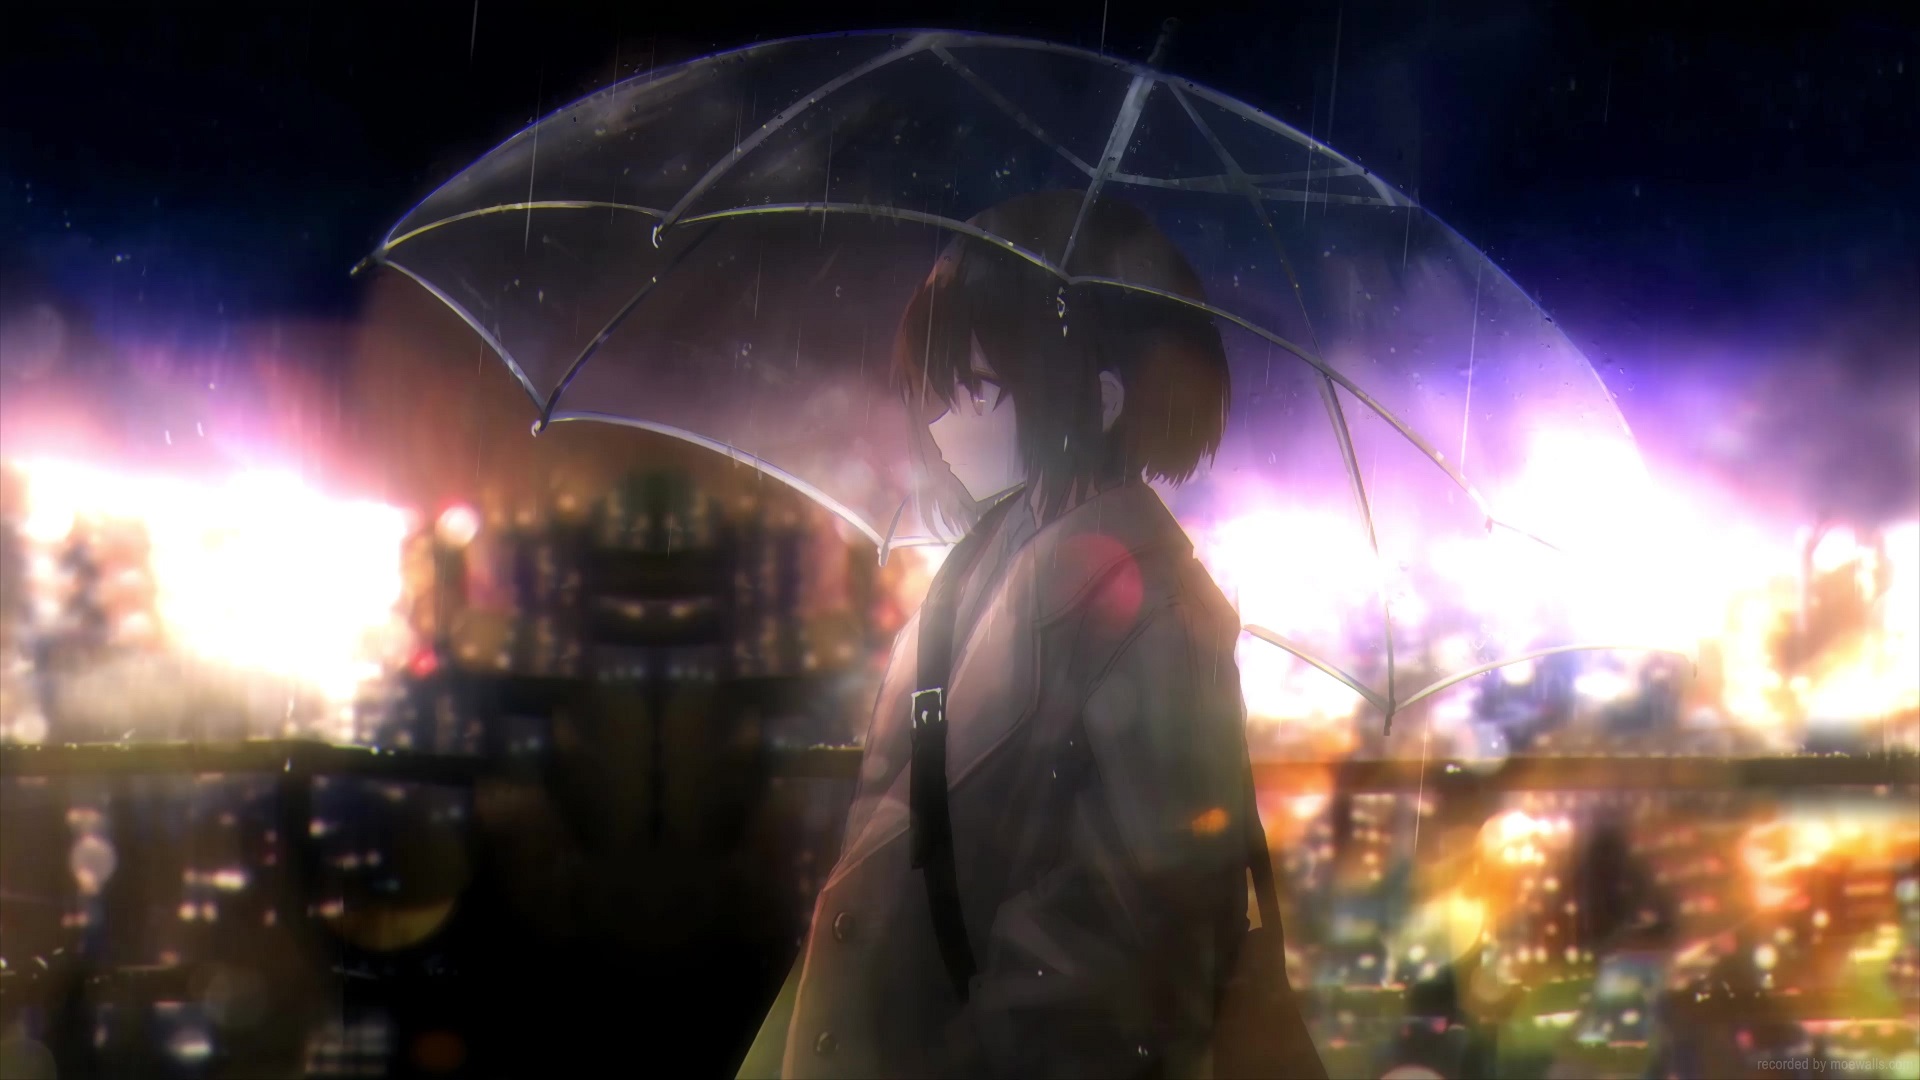 Umbrella Anime Girl City Night Rain Live Wallpaper - MoeWalls